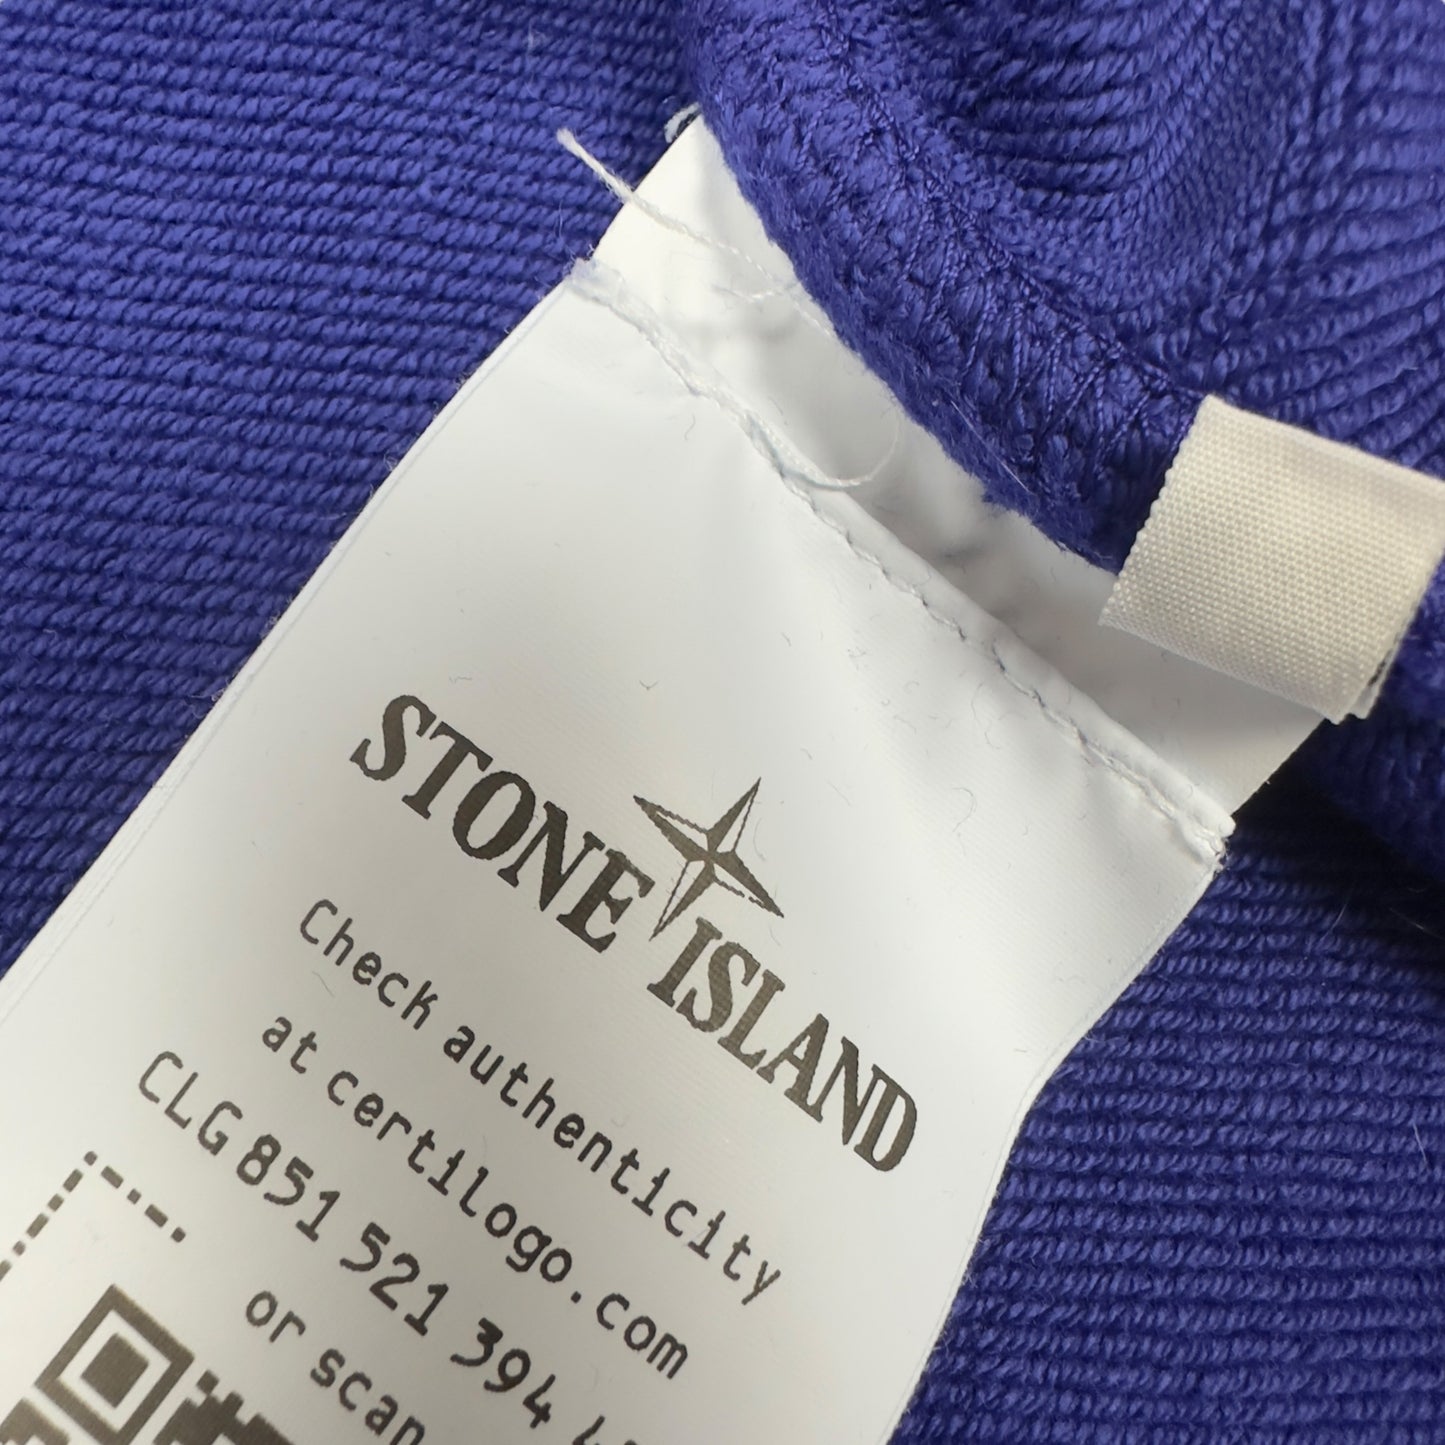 S/S 22 Stone Island Sweater - Royal Blue